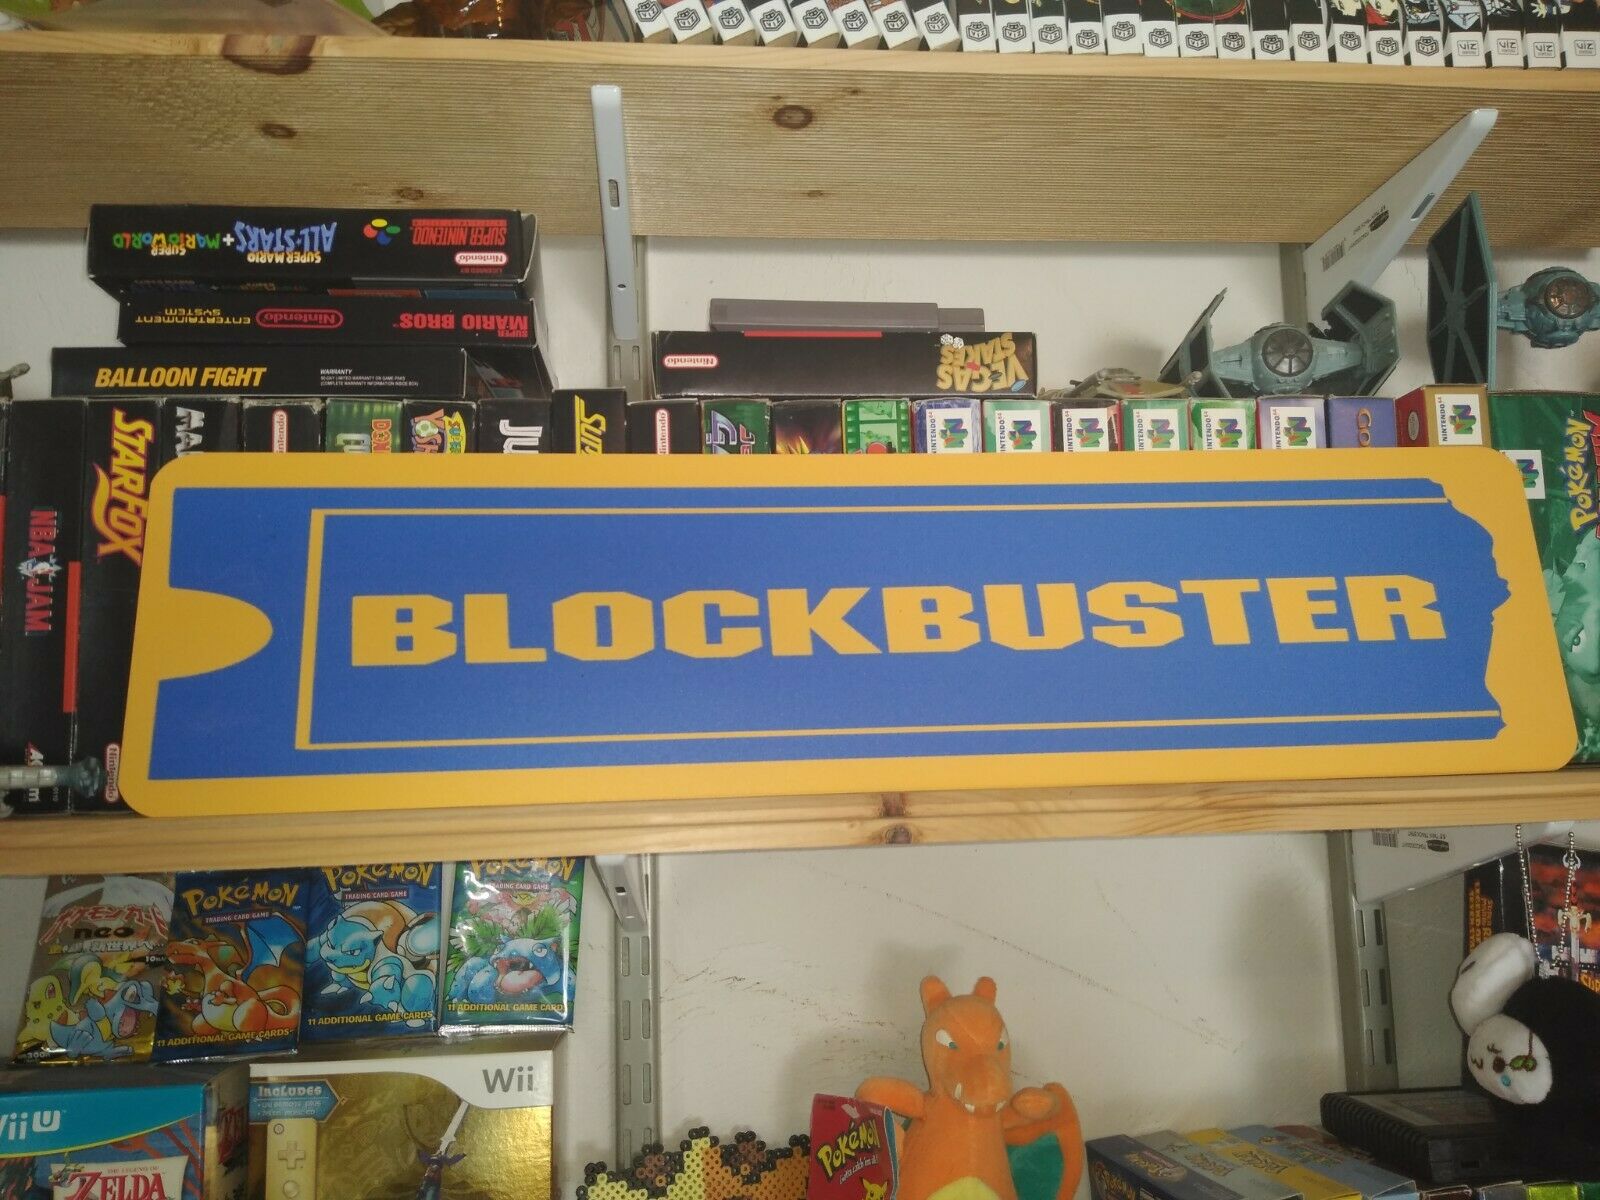 Blockbuster Sign, 6" X 24" Aluminium Retail Display, Block Buster!! Video Games!